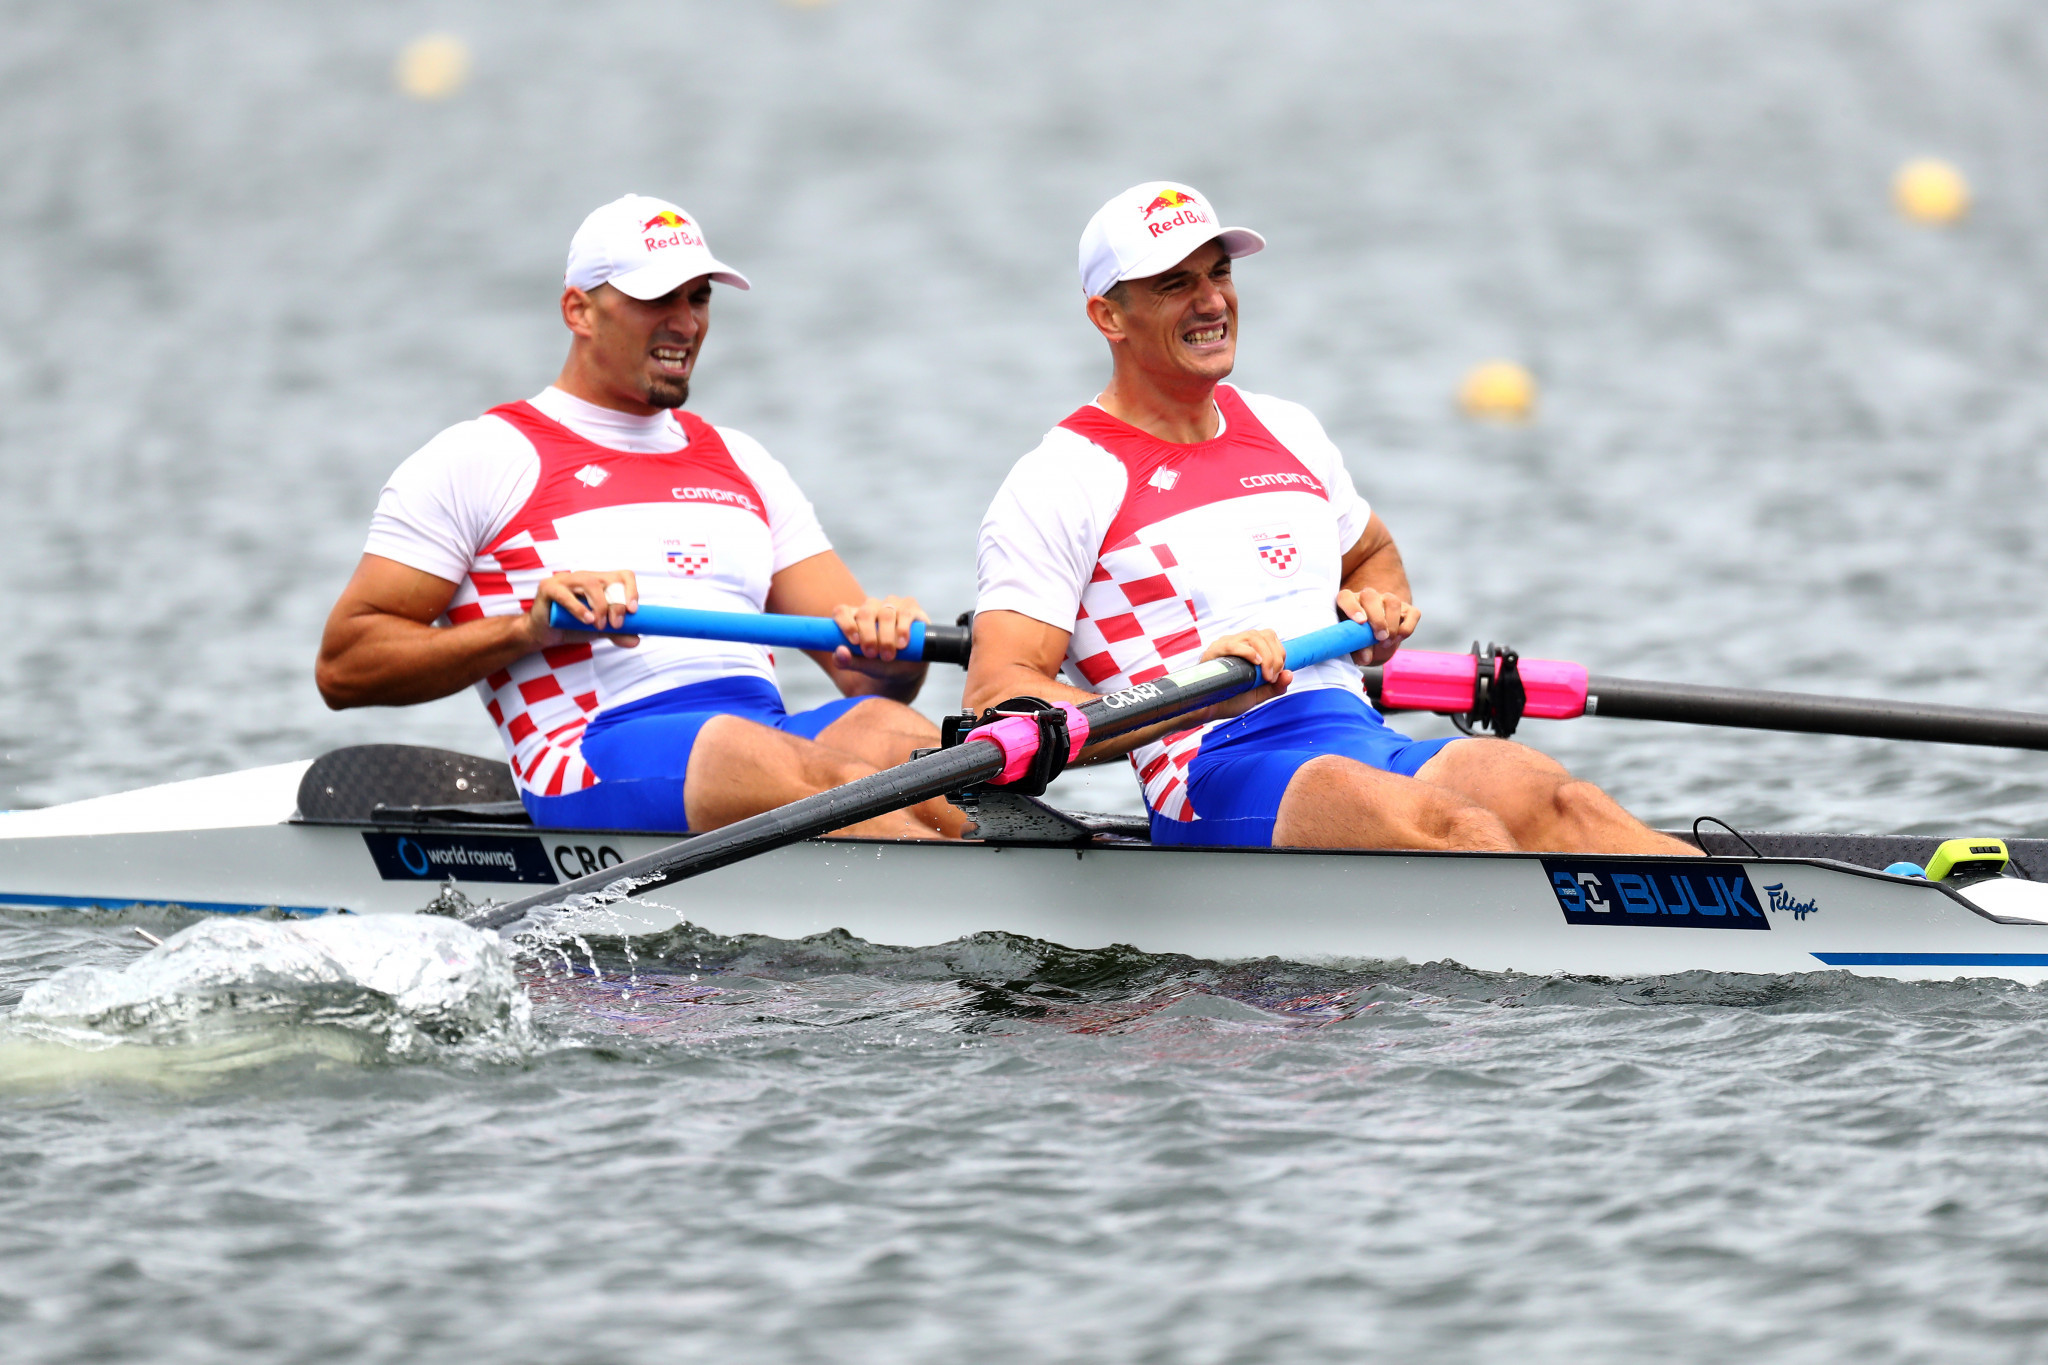 Sinković brothers top men's pairs heat as World Rowing Championships get underway